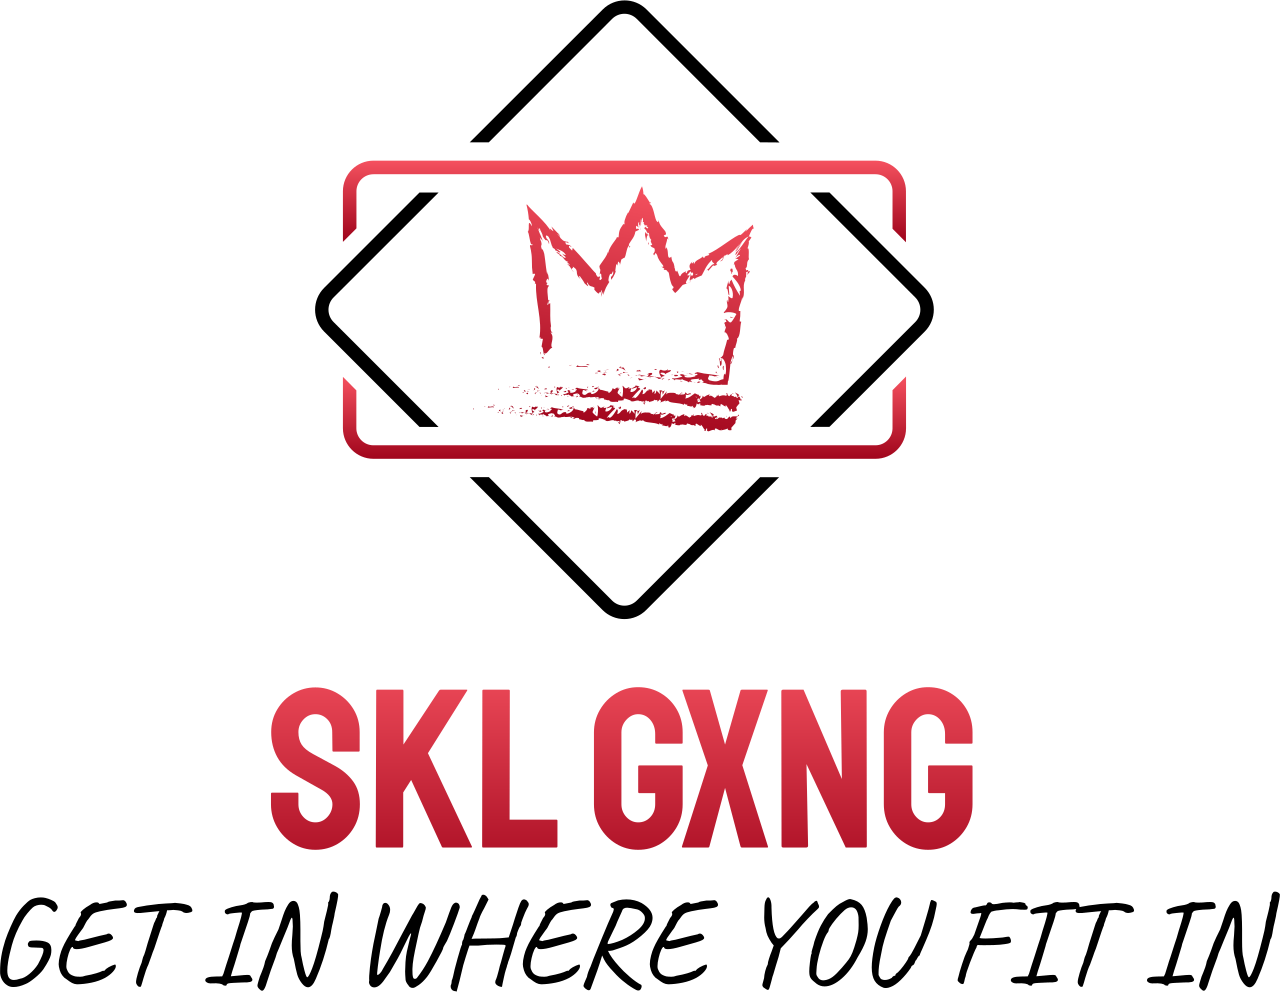 SKL GXNG's web page